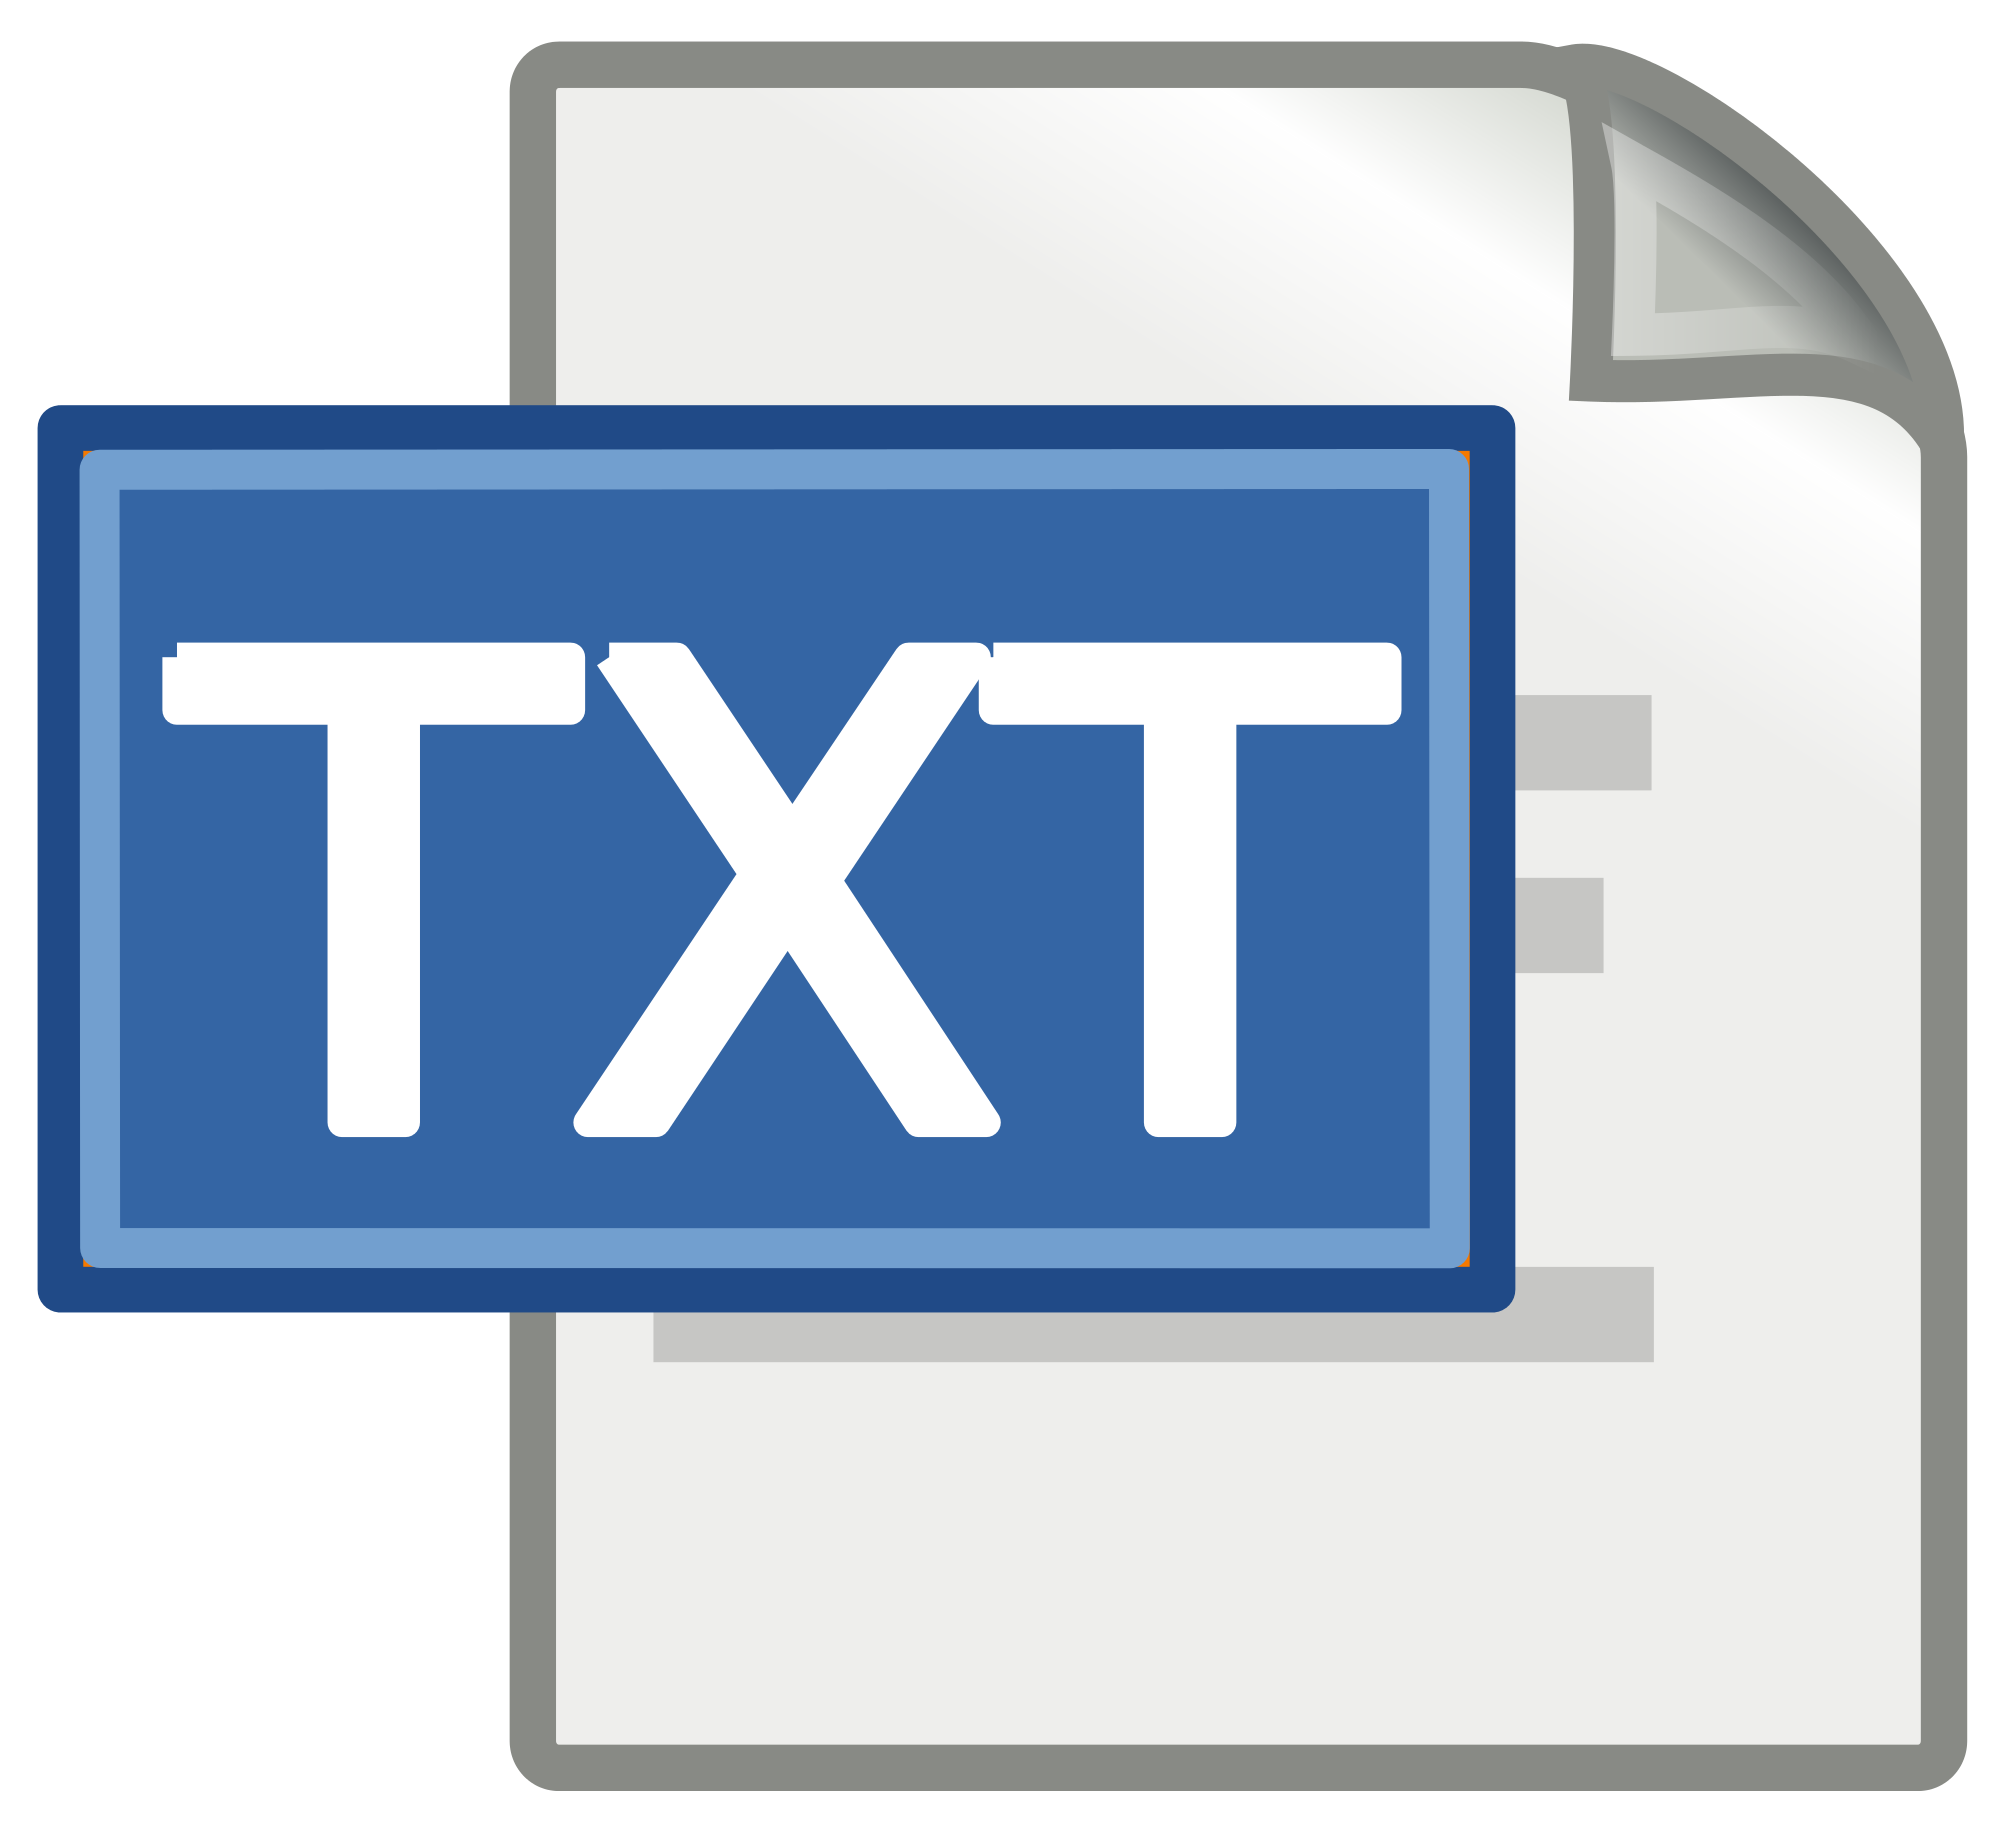 128x128 px, TXT File Extensio